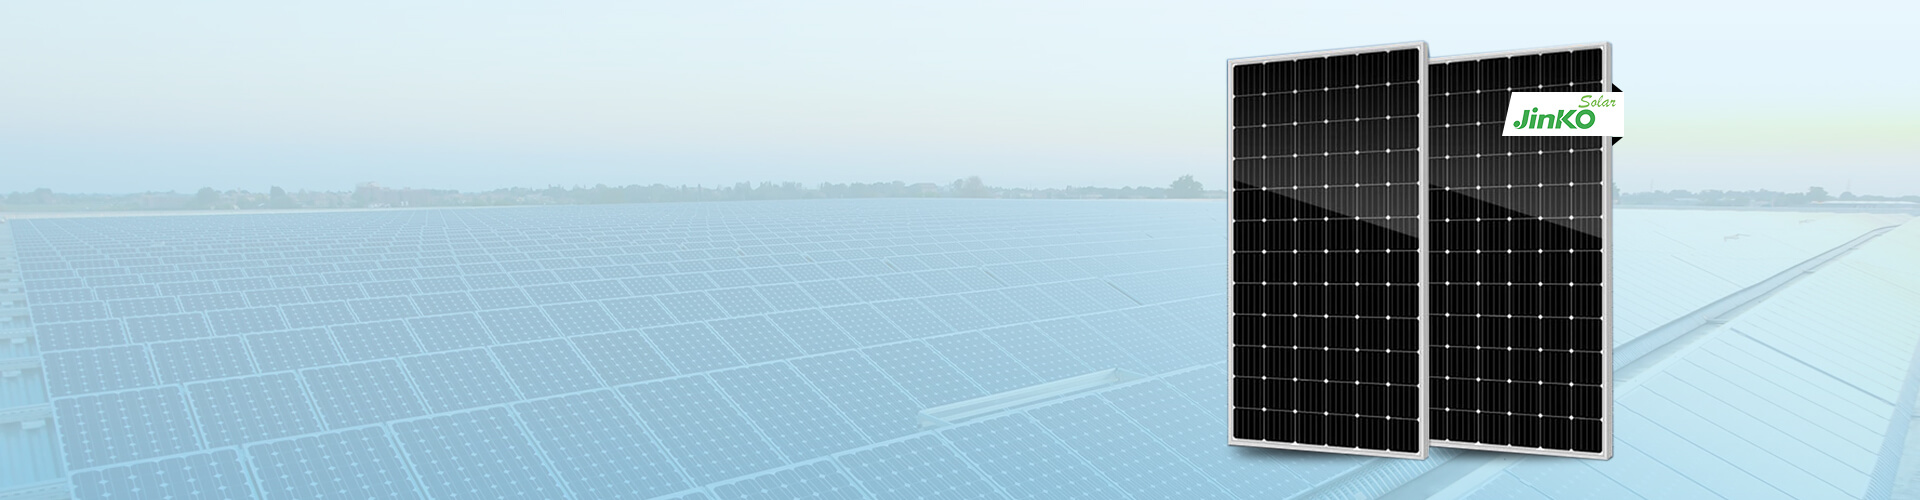 Walking the Talk: Jinko Solar Going 100% Renewable